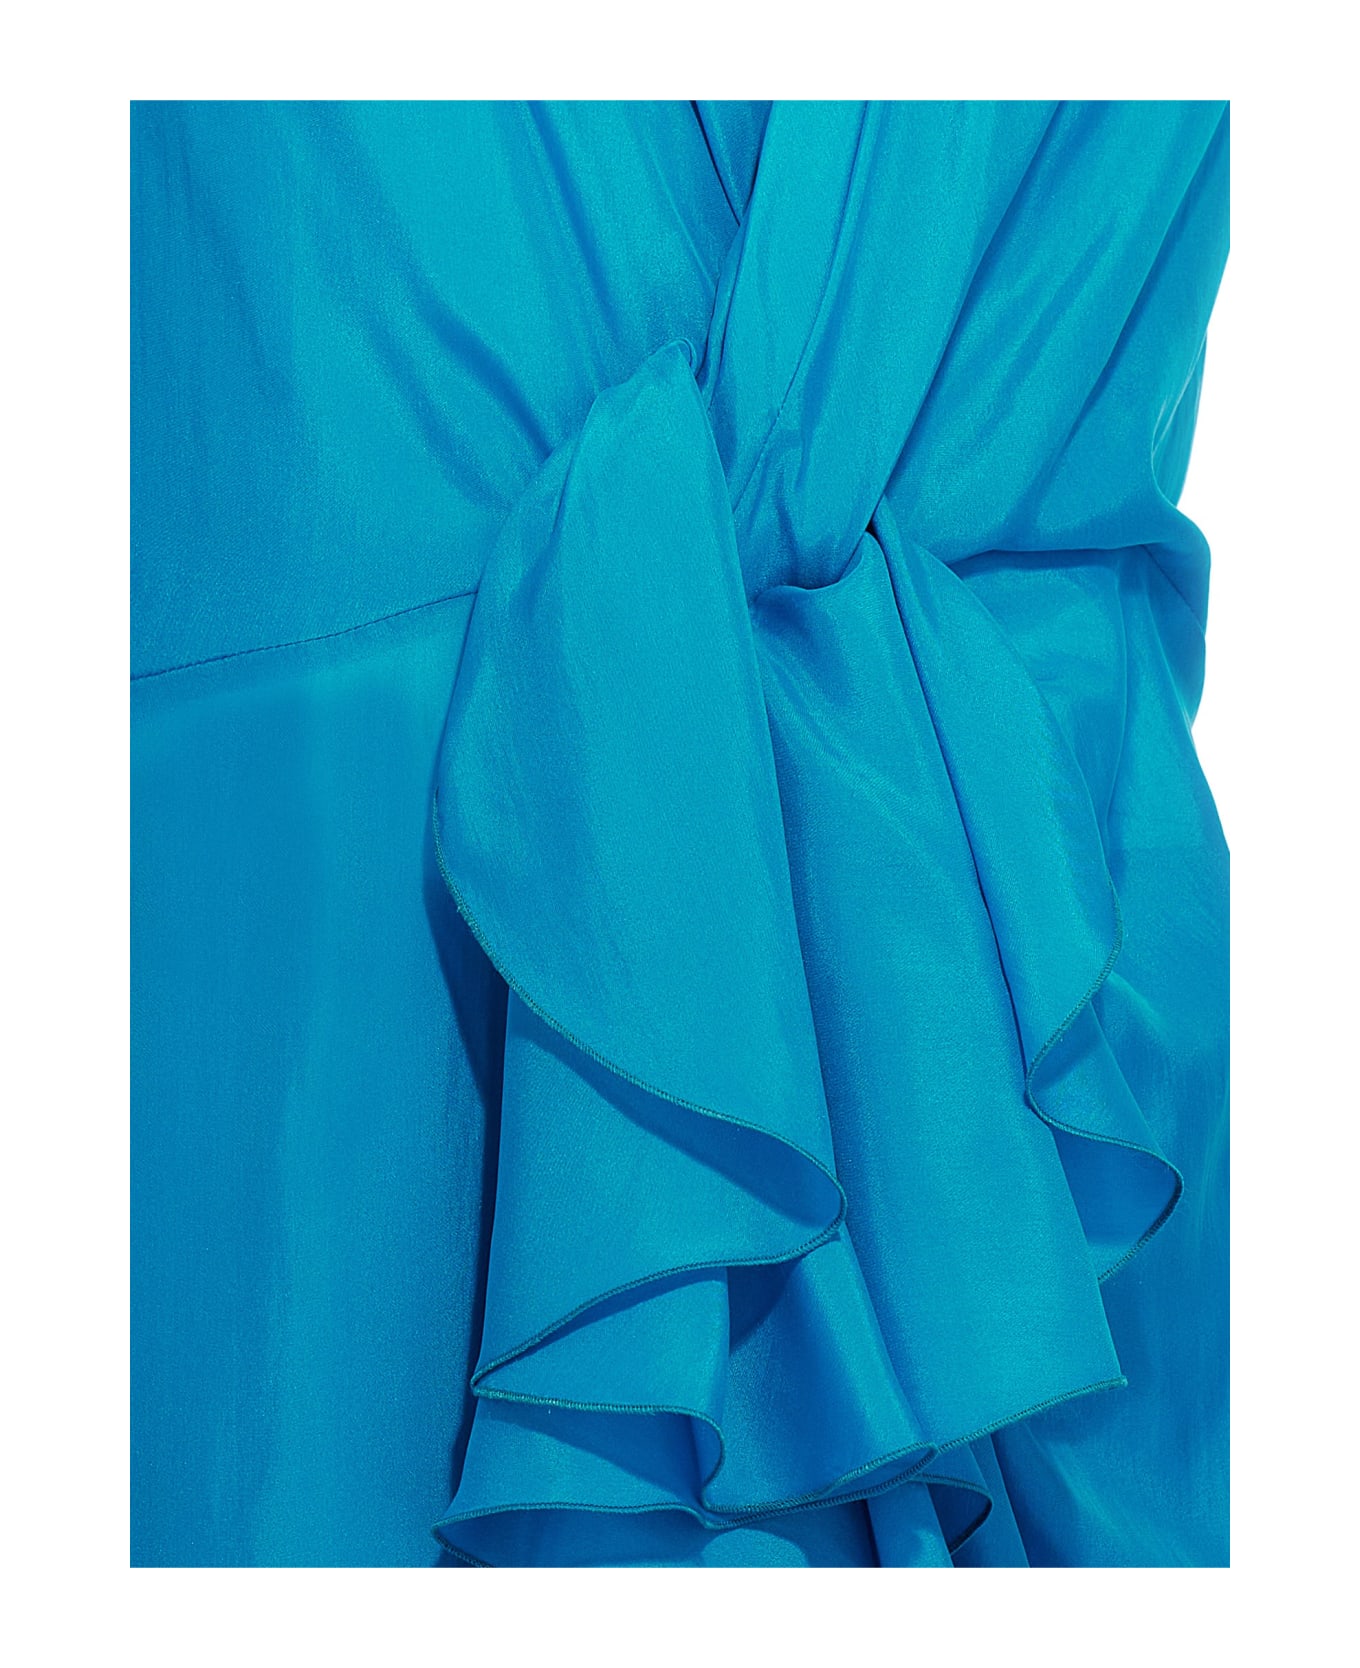 Alberta Ferretti Long Ruffles Dress - Light Blue